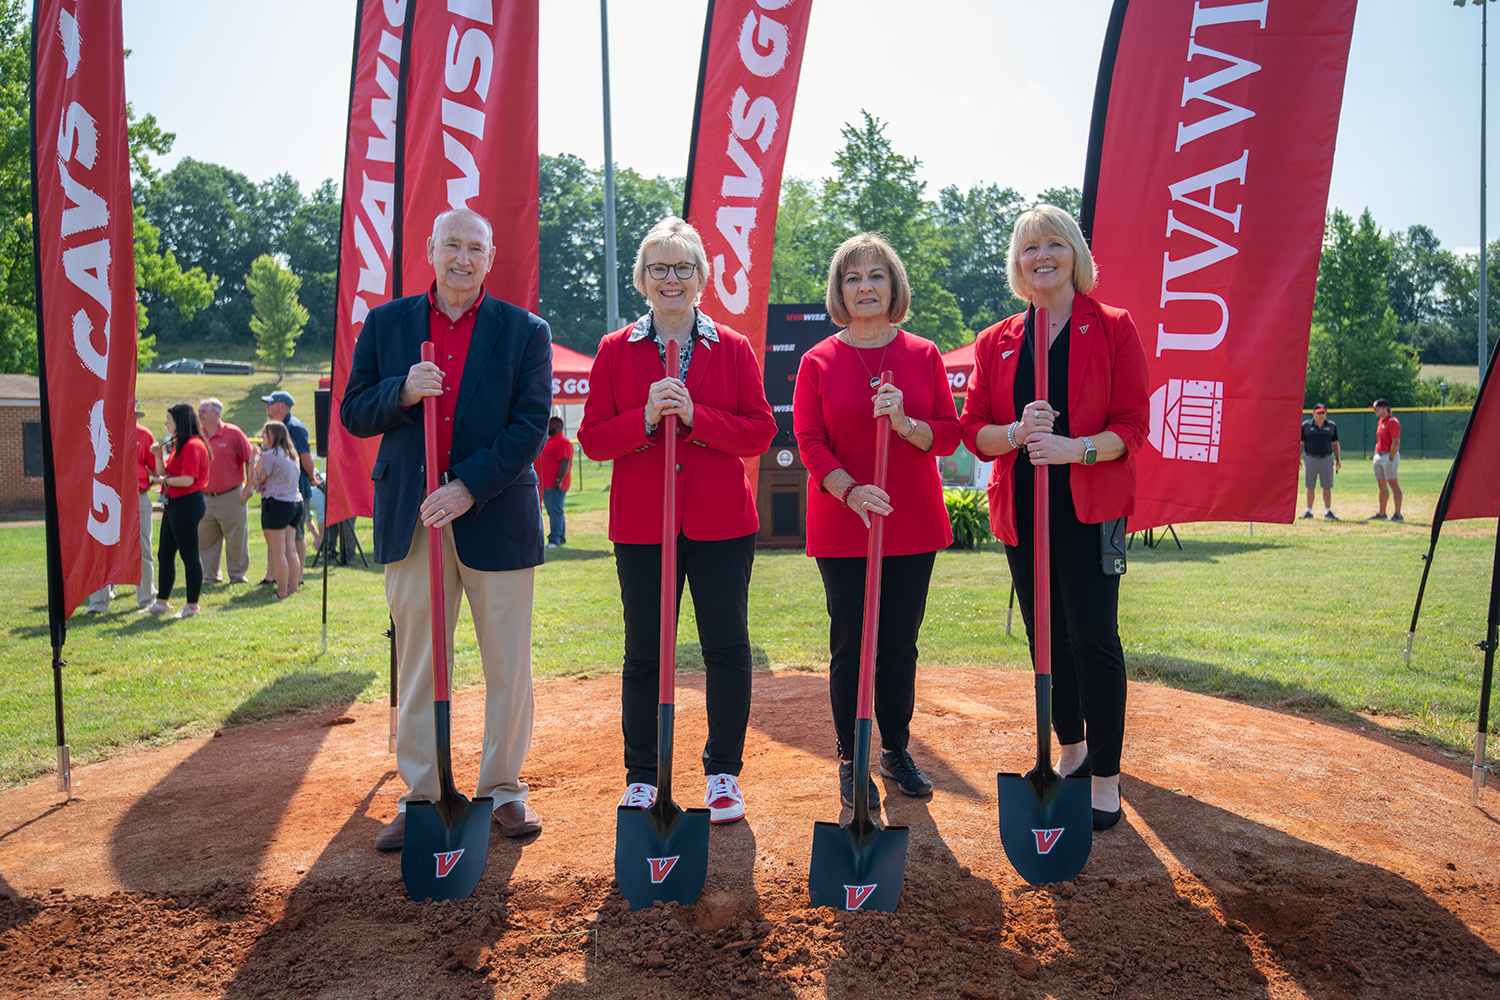 Lewey Lee, Chancellor Henry, Rhonda Perkins, Valerie Lawson with shovels